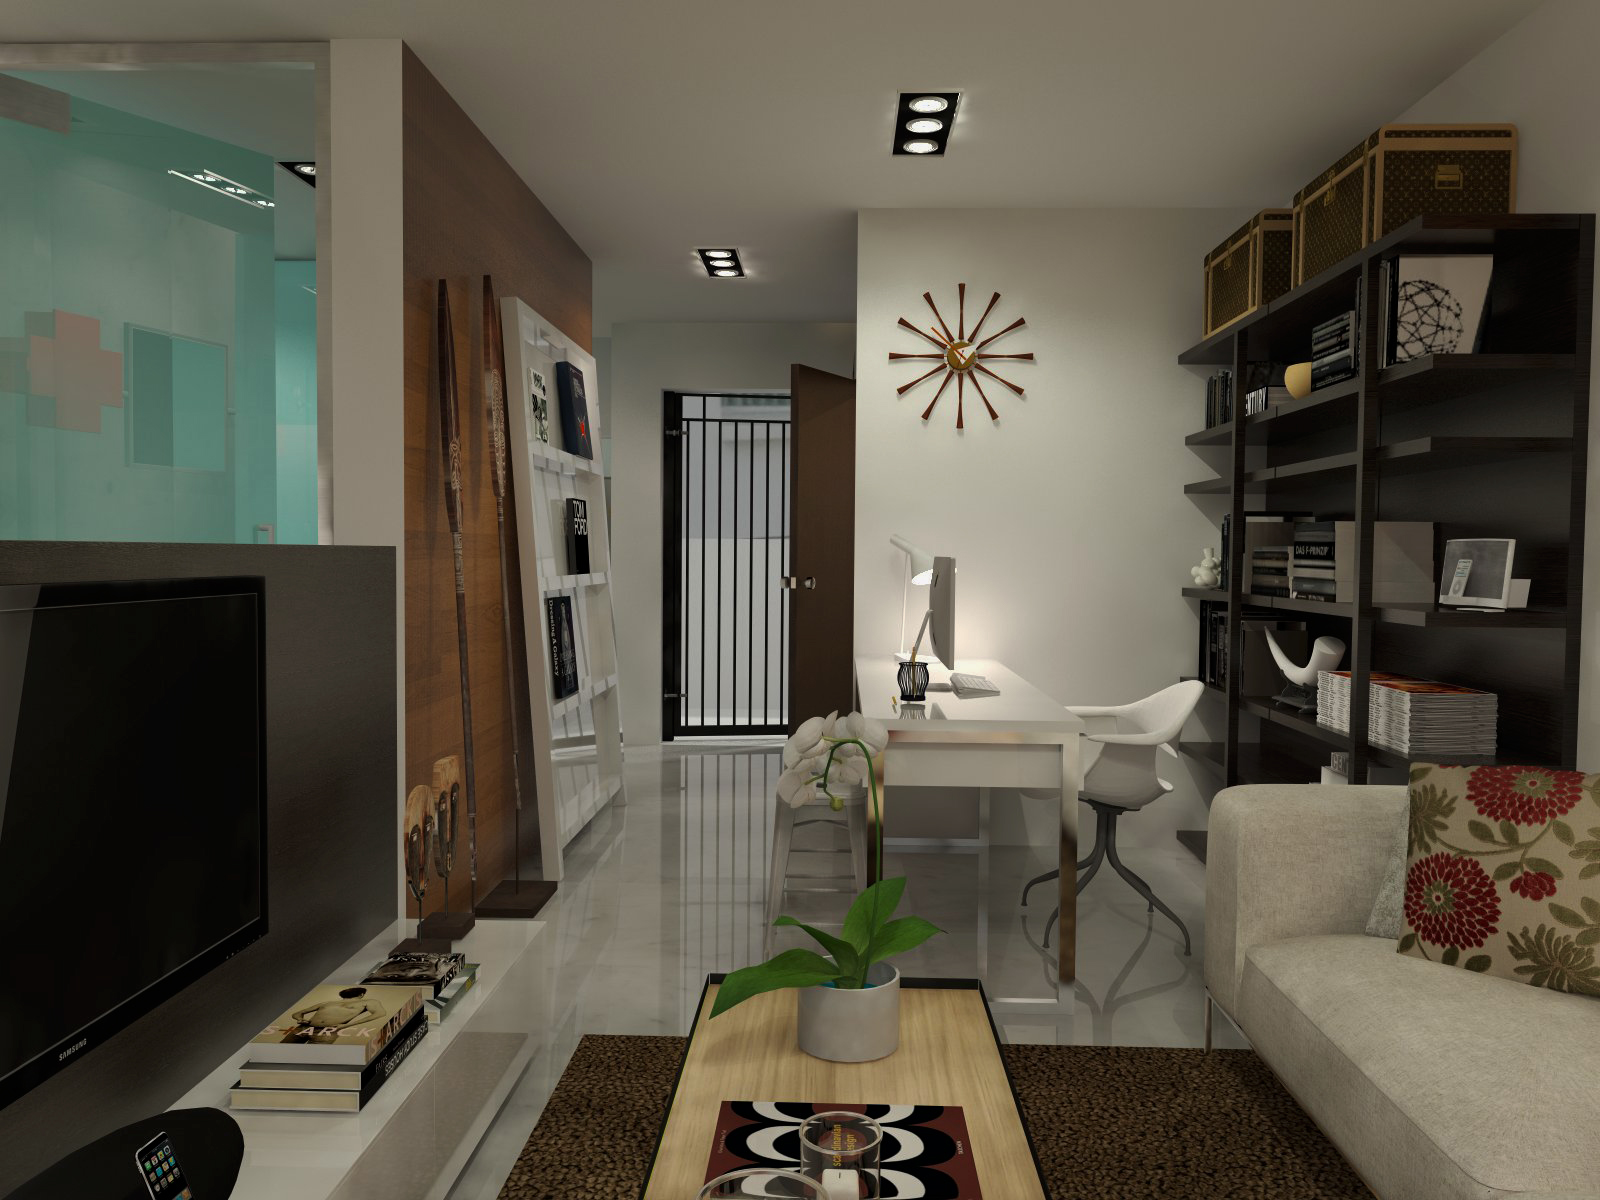 2 Room Flexi Design Ideas Bedroom Aesthetic